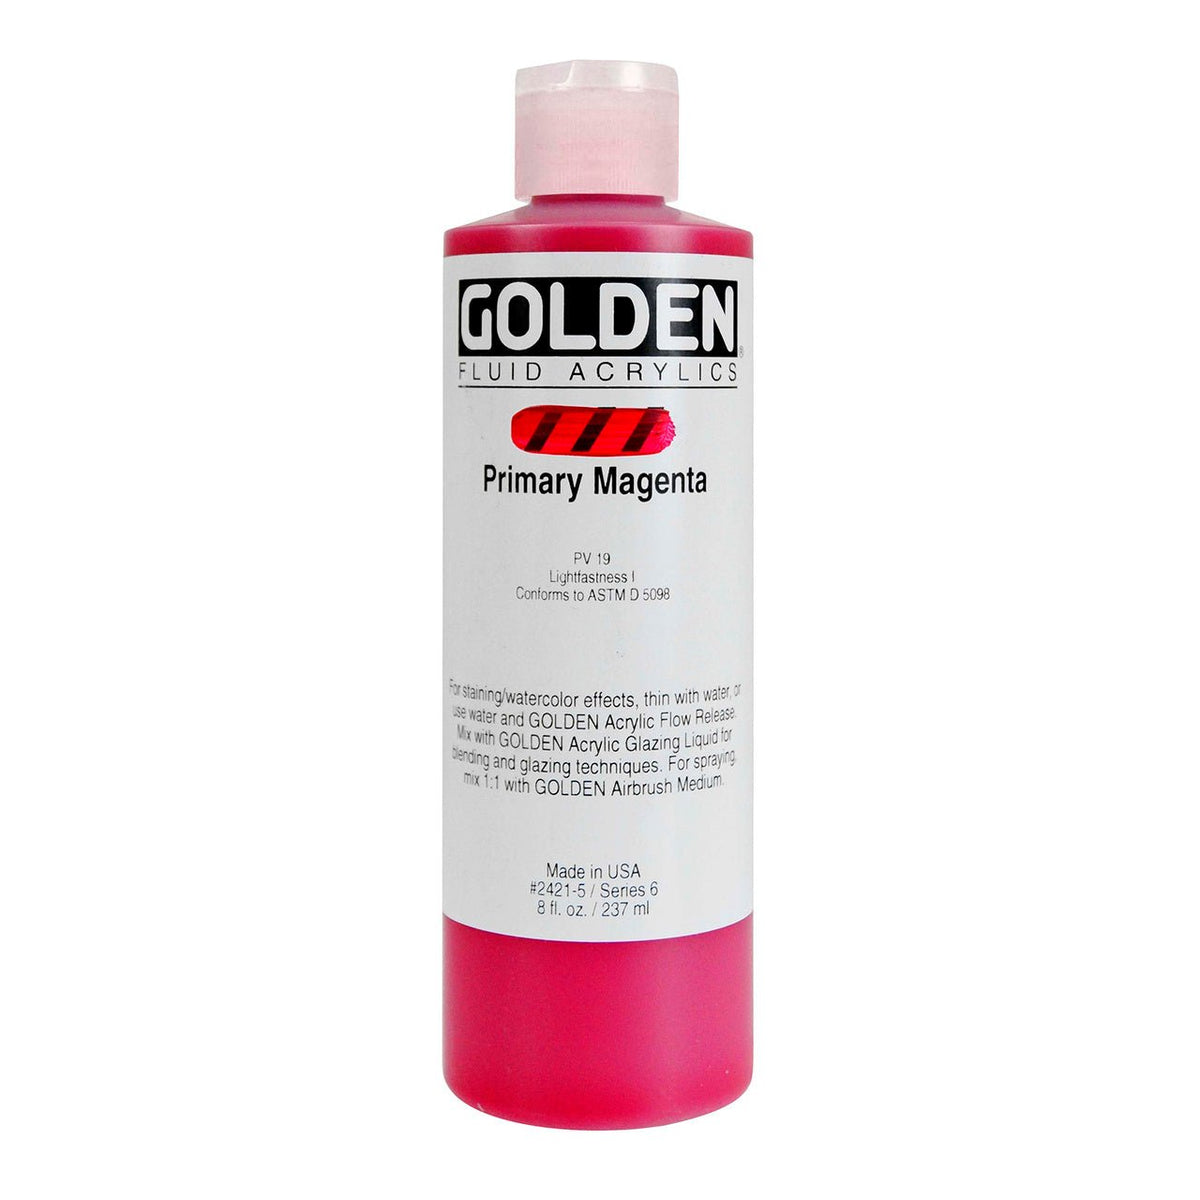 Golden Fluid Acrylic Primary Magenta 8 oz - merriartist.com